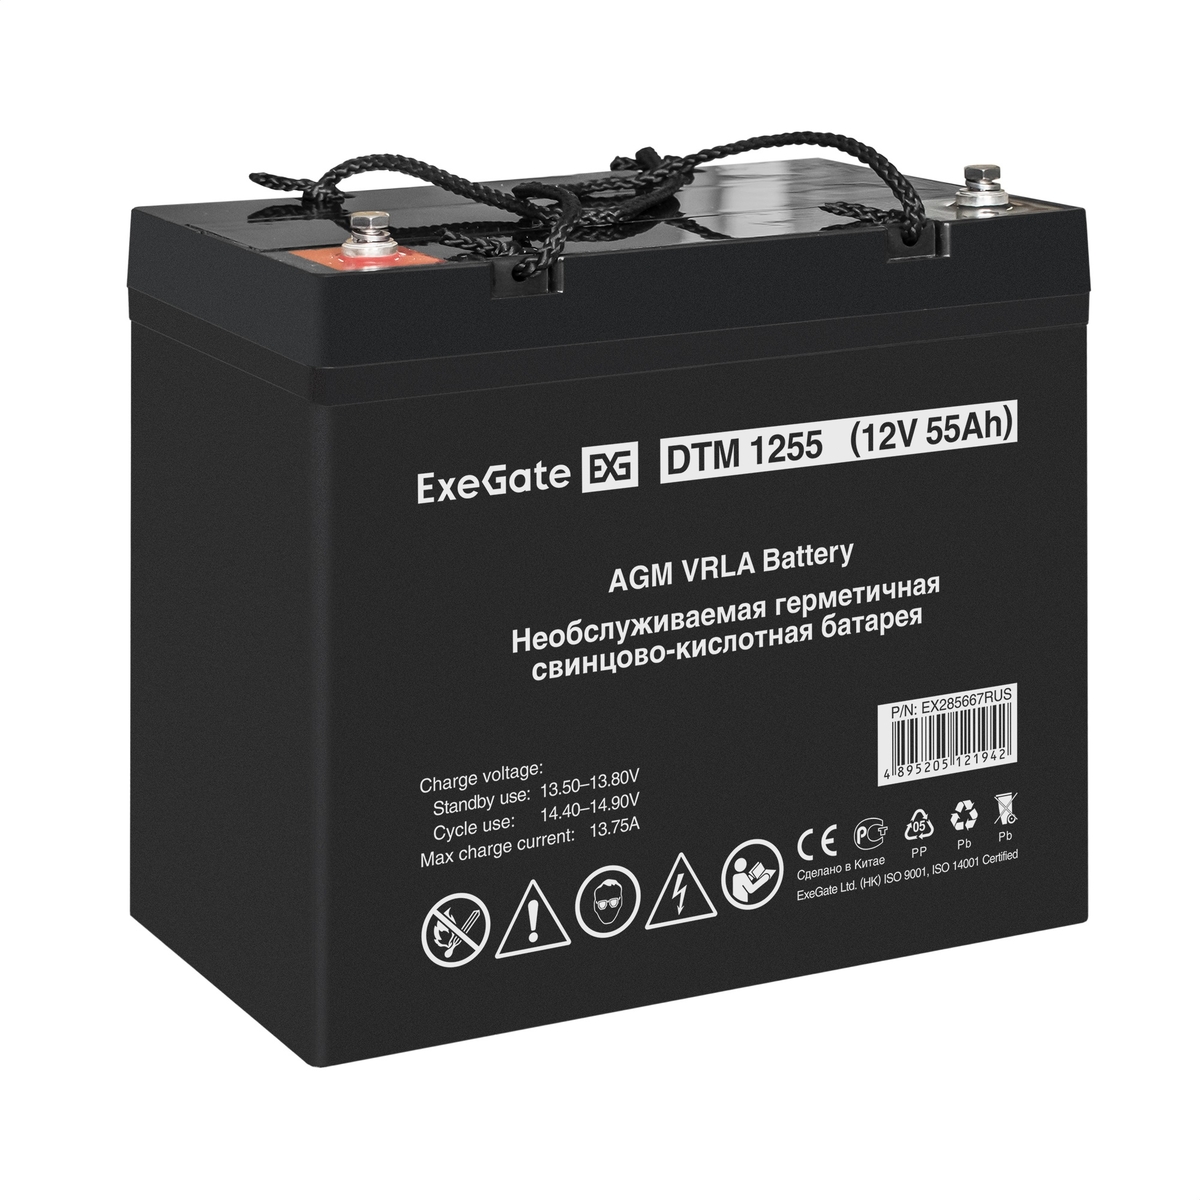 UPS set EX296001 + battery 55Ah EX285667 2 piece